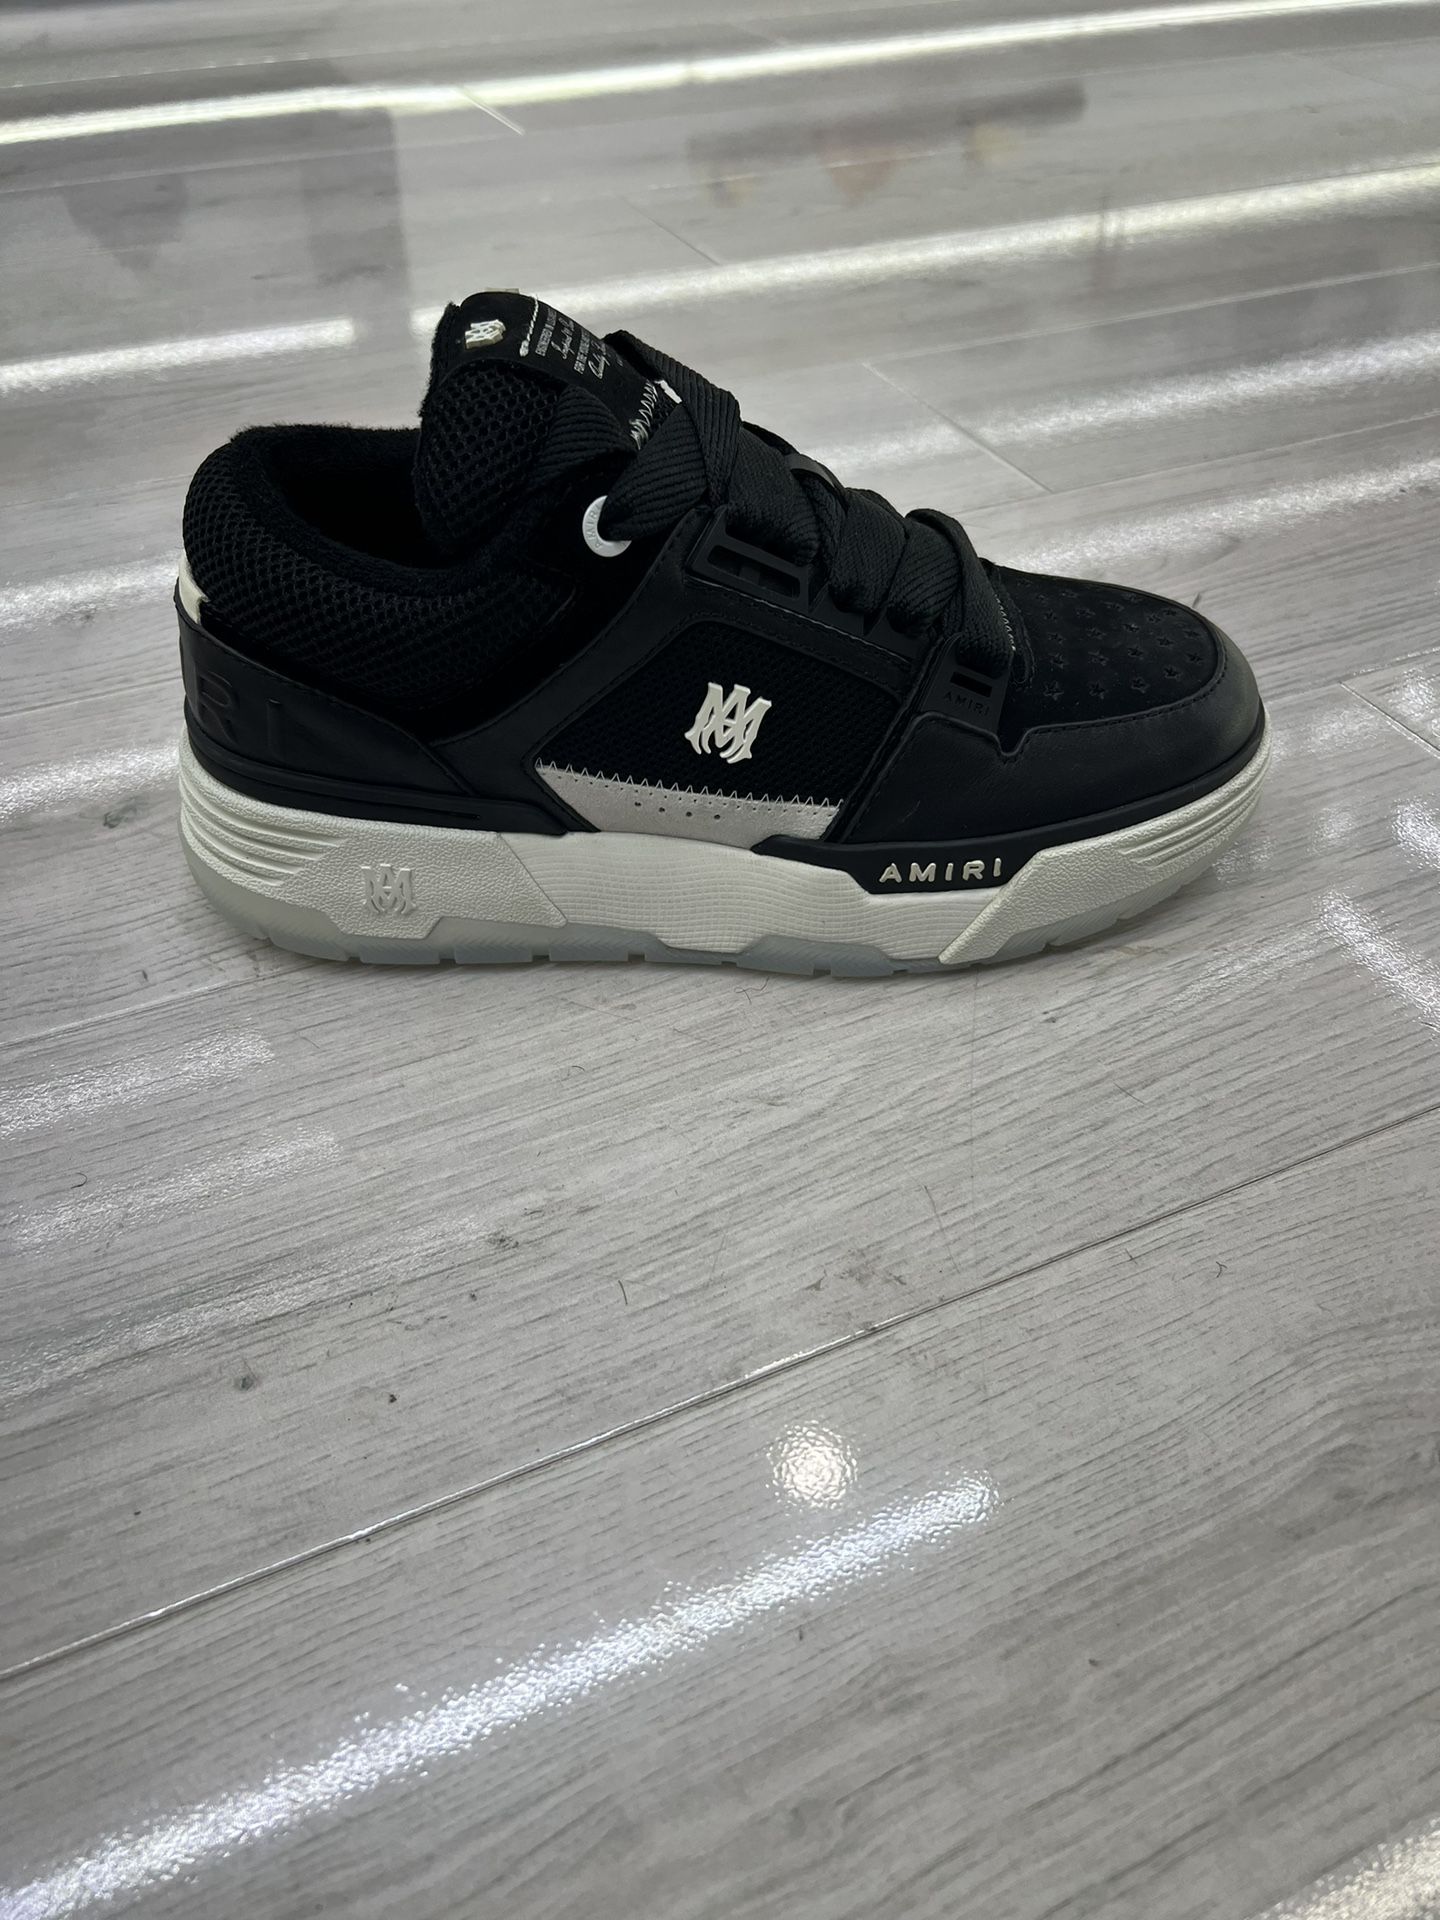 Amiri Black Sneakers